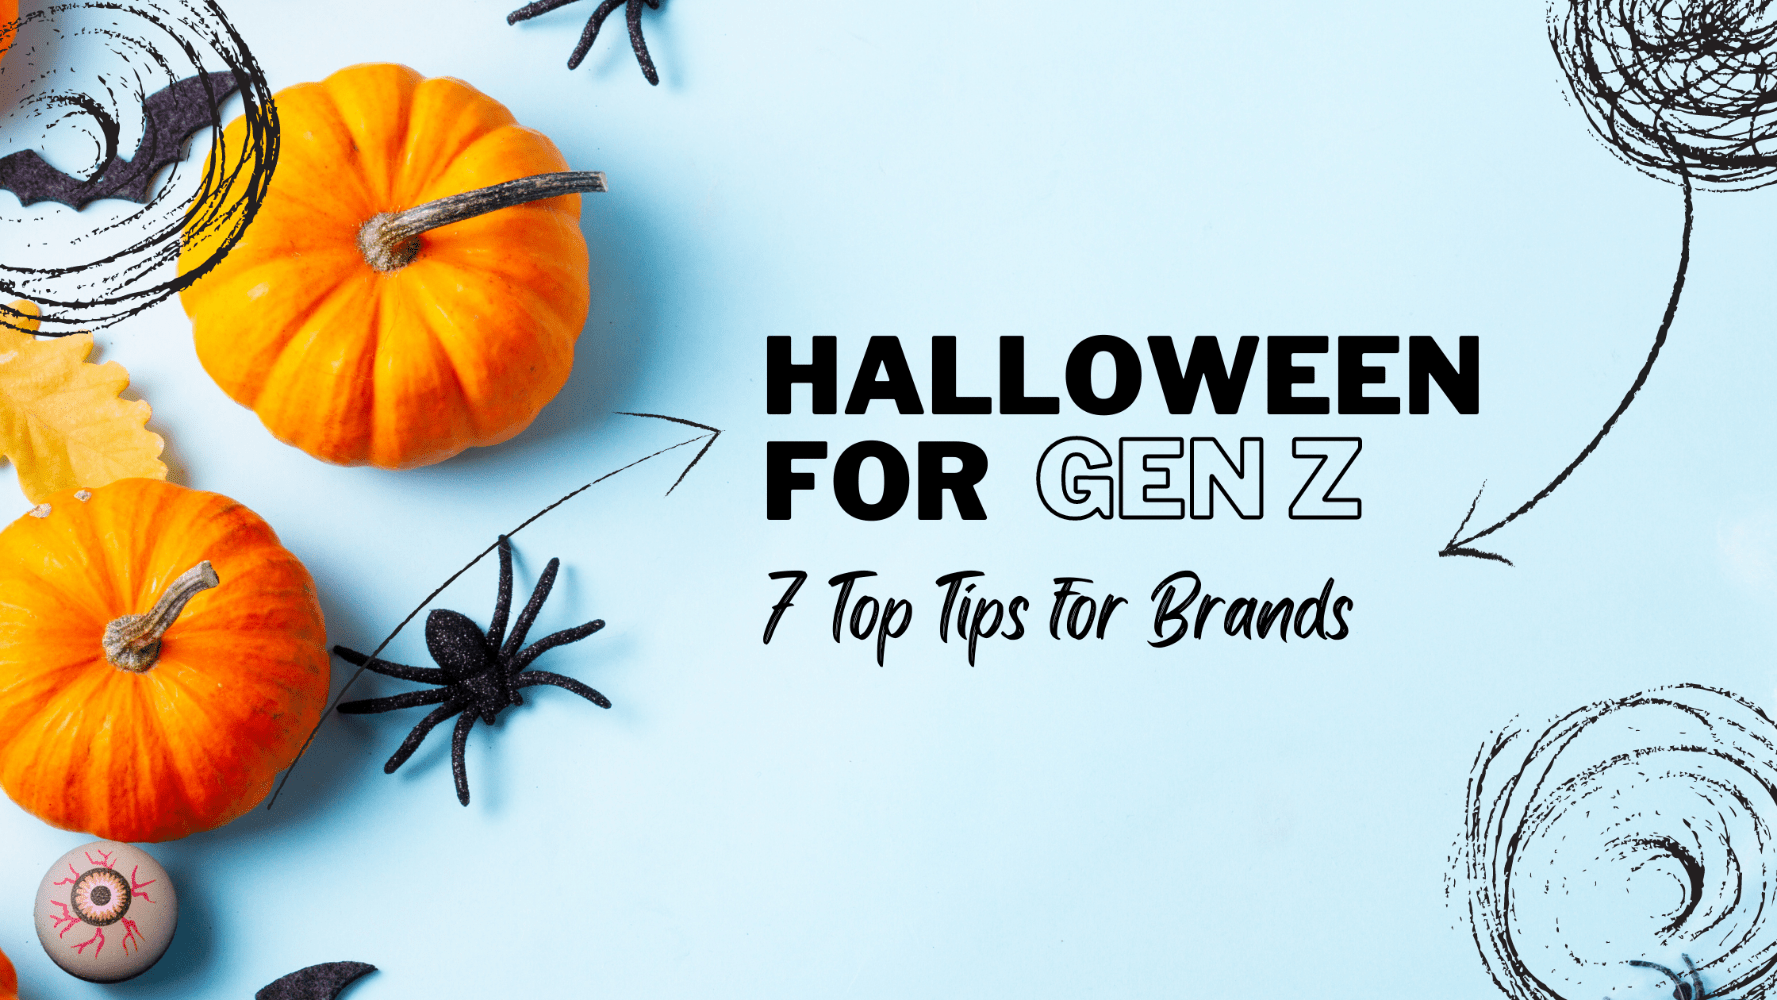 Fanbytes | Gen Z Marketing | Halloween for Gen Z - Top Tips for Brands